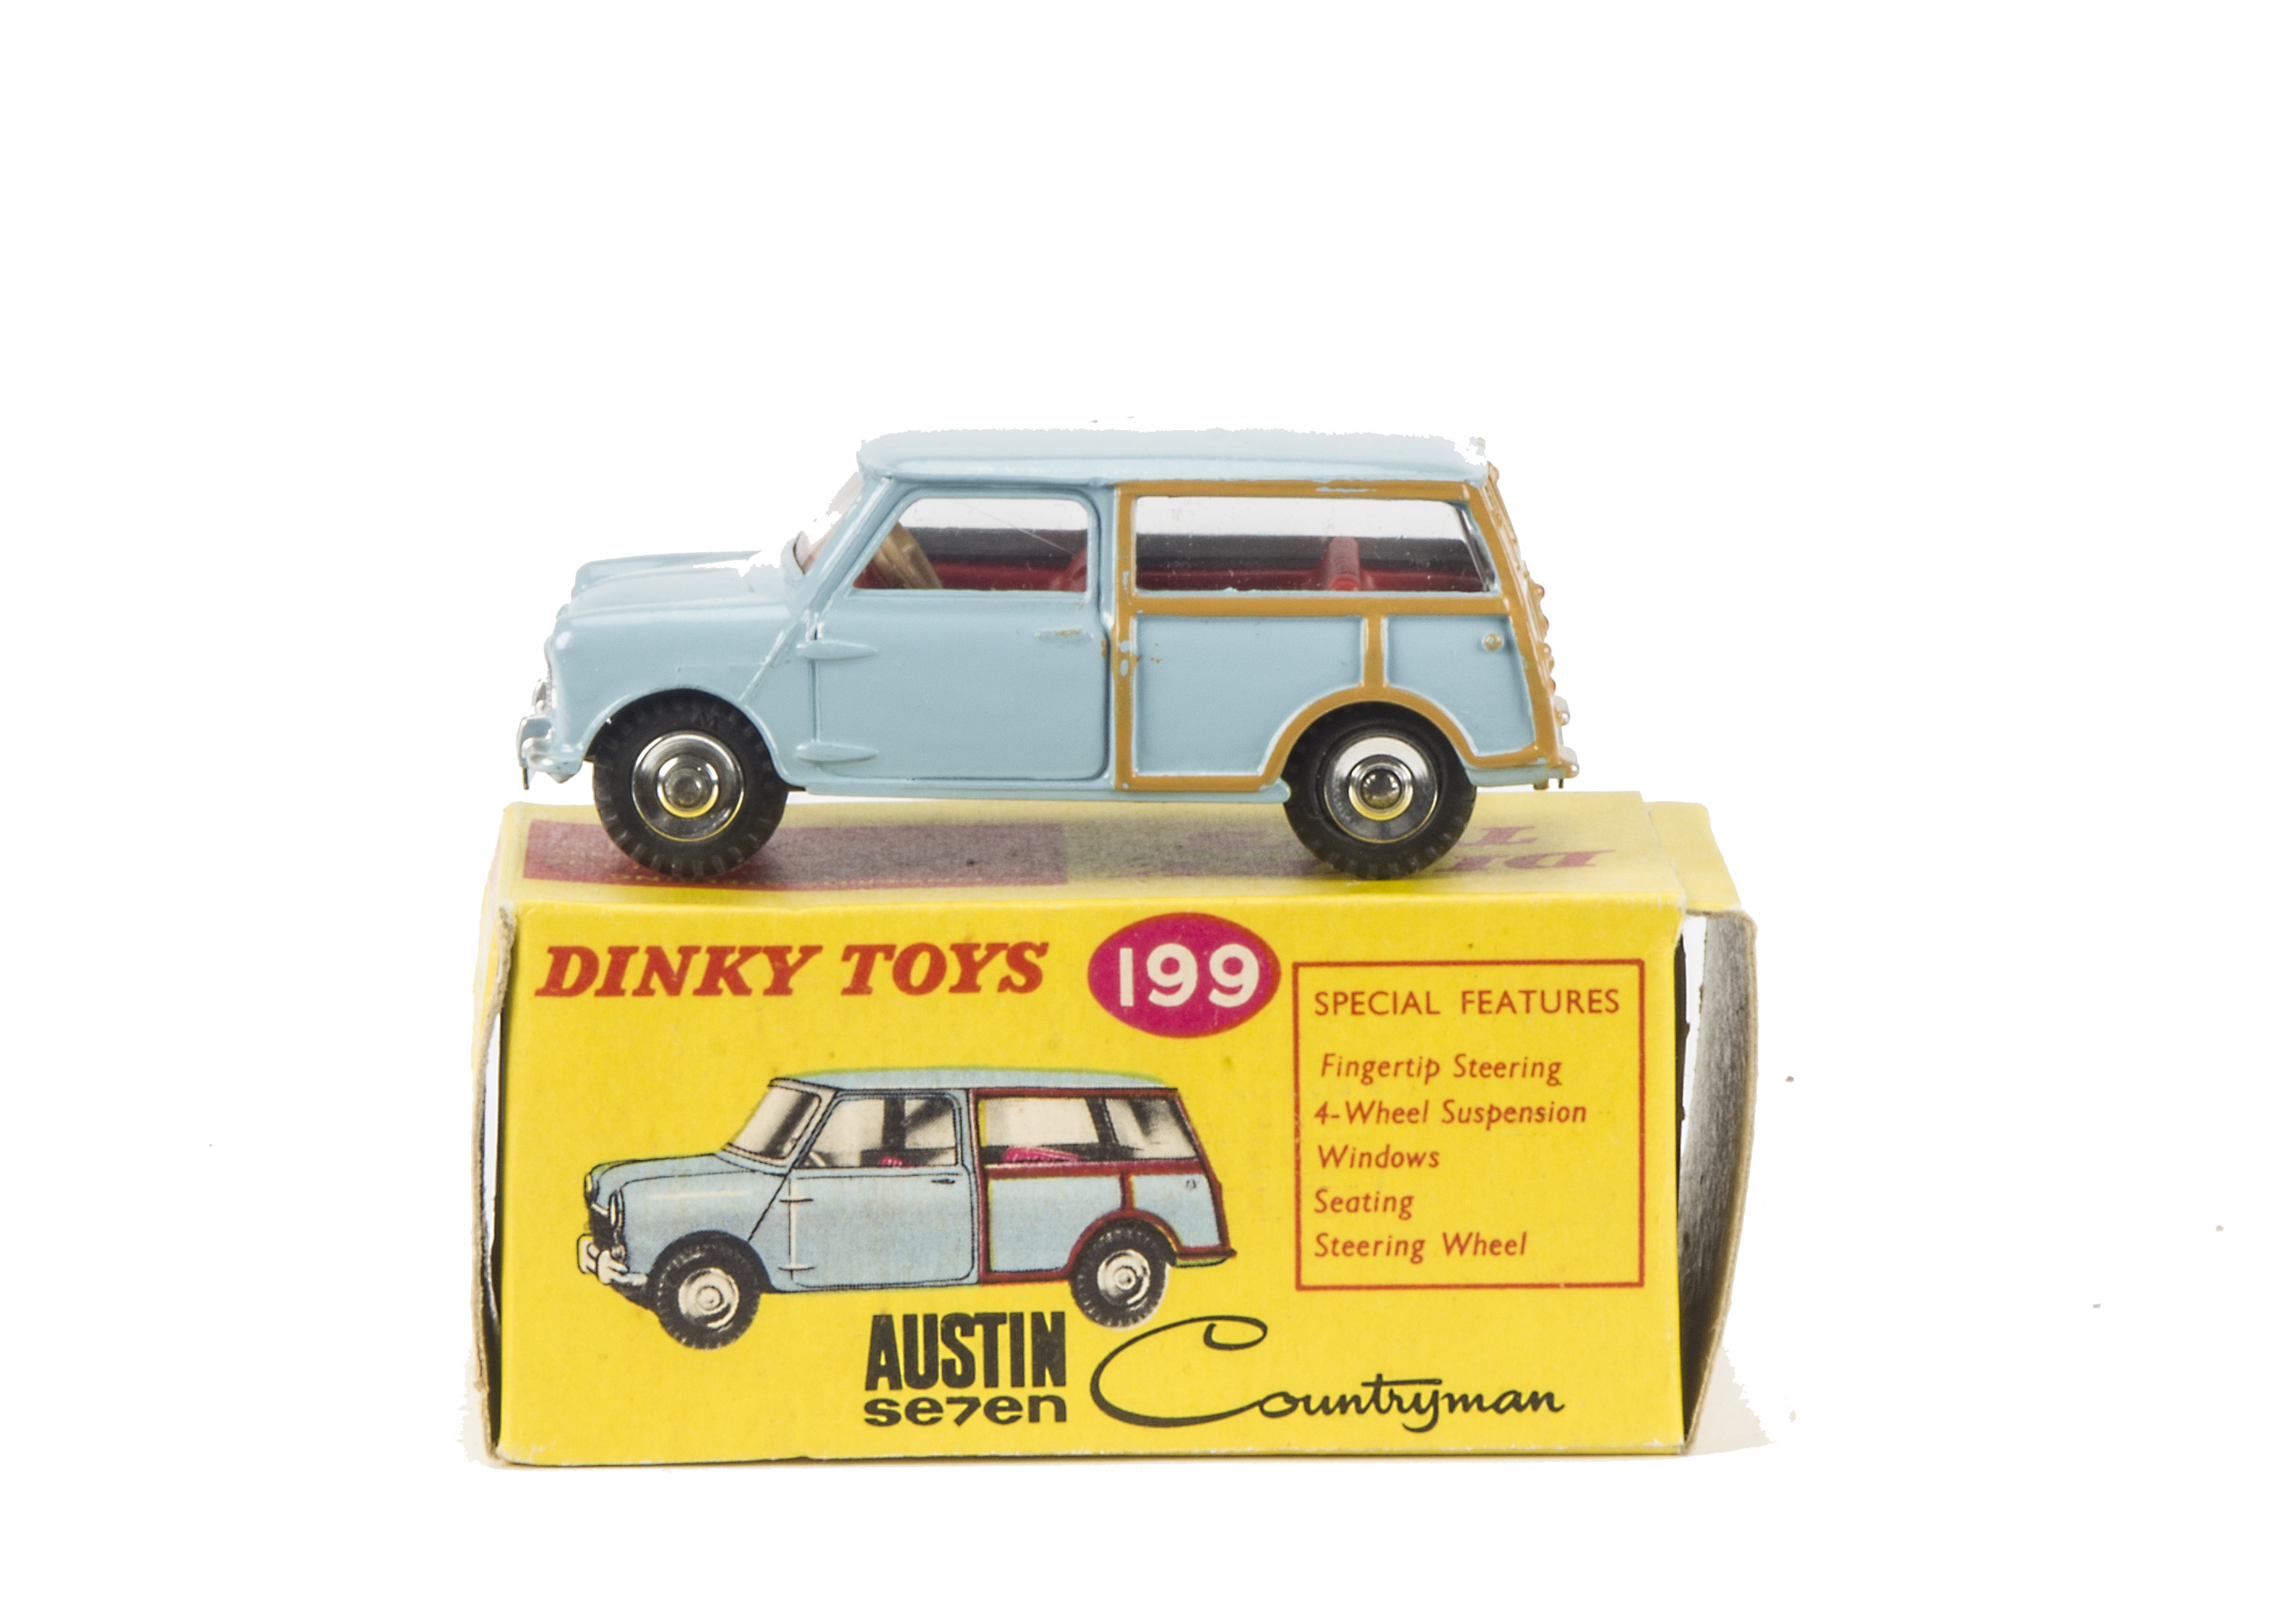 A Dinky Toys 199 Austin 7 Countryman, light blue body, red interior, black gloss base, spun hubs, in